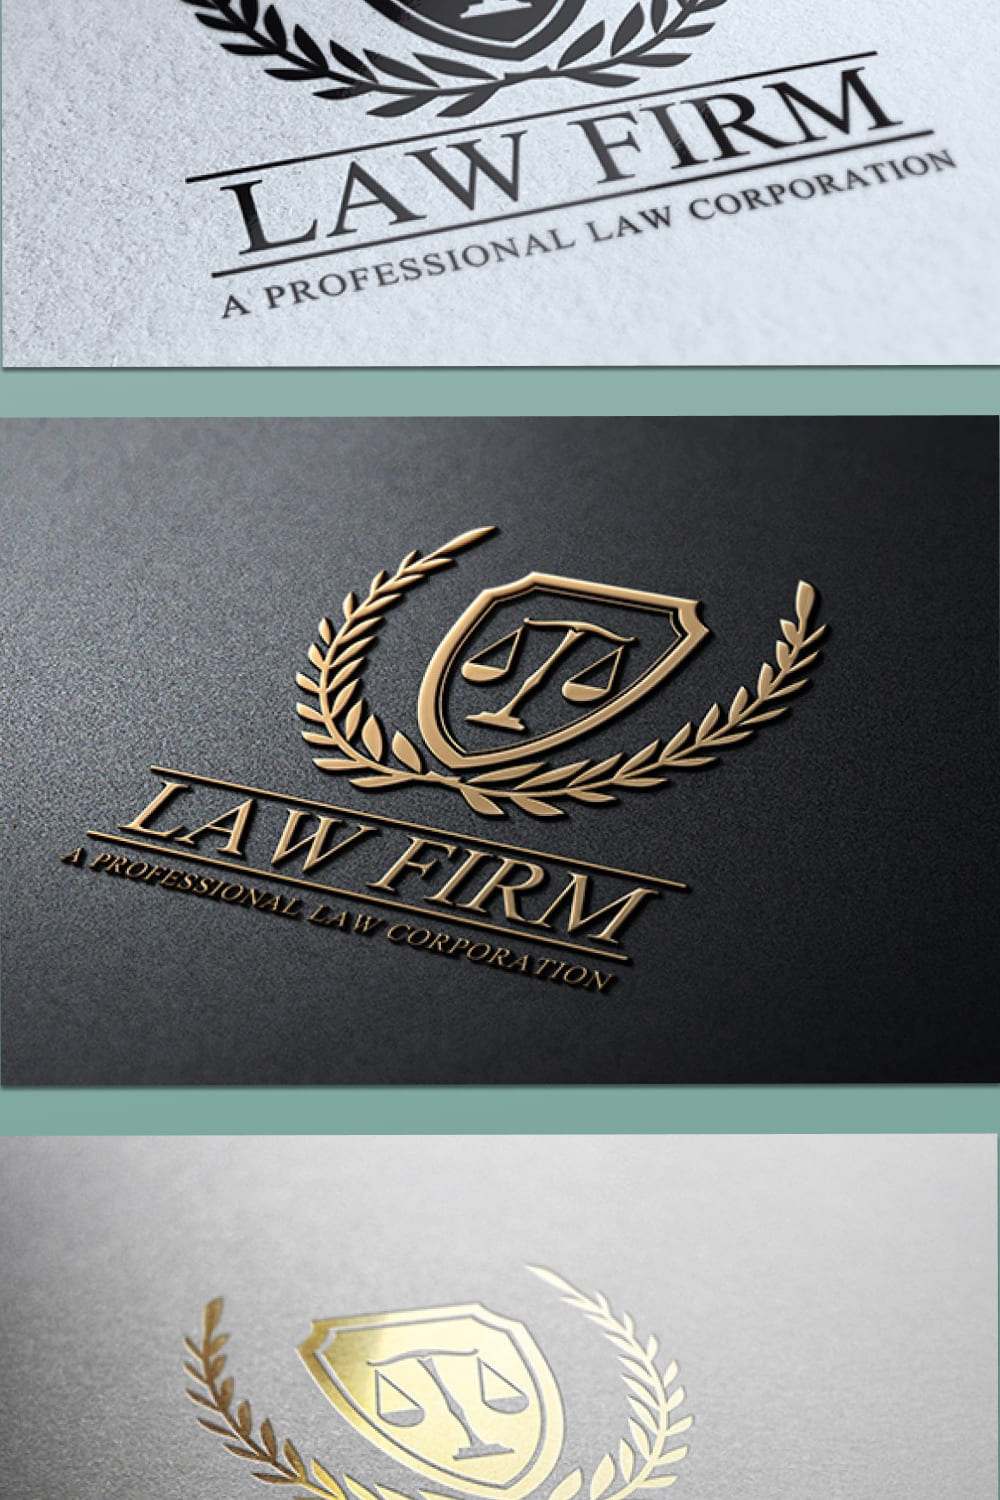 law firm logotype.